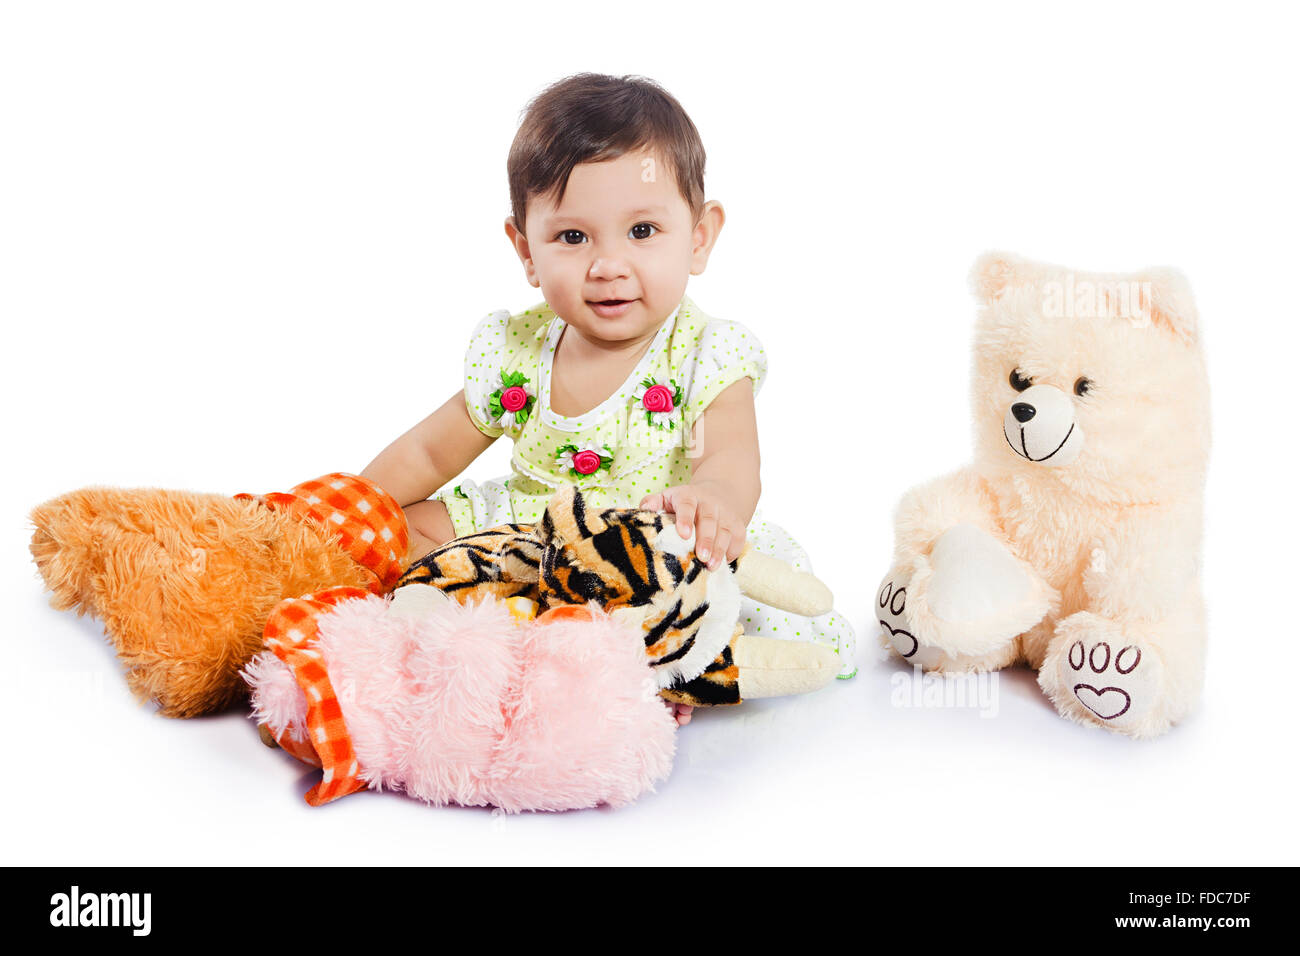 1 Child Baby Girl Sitting Playing Stuffed toys Stock Photo